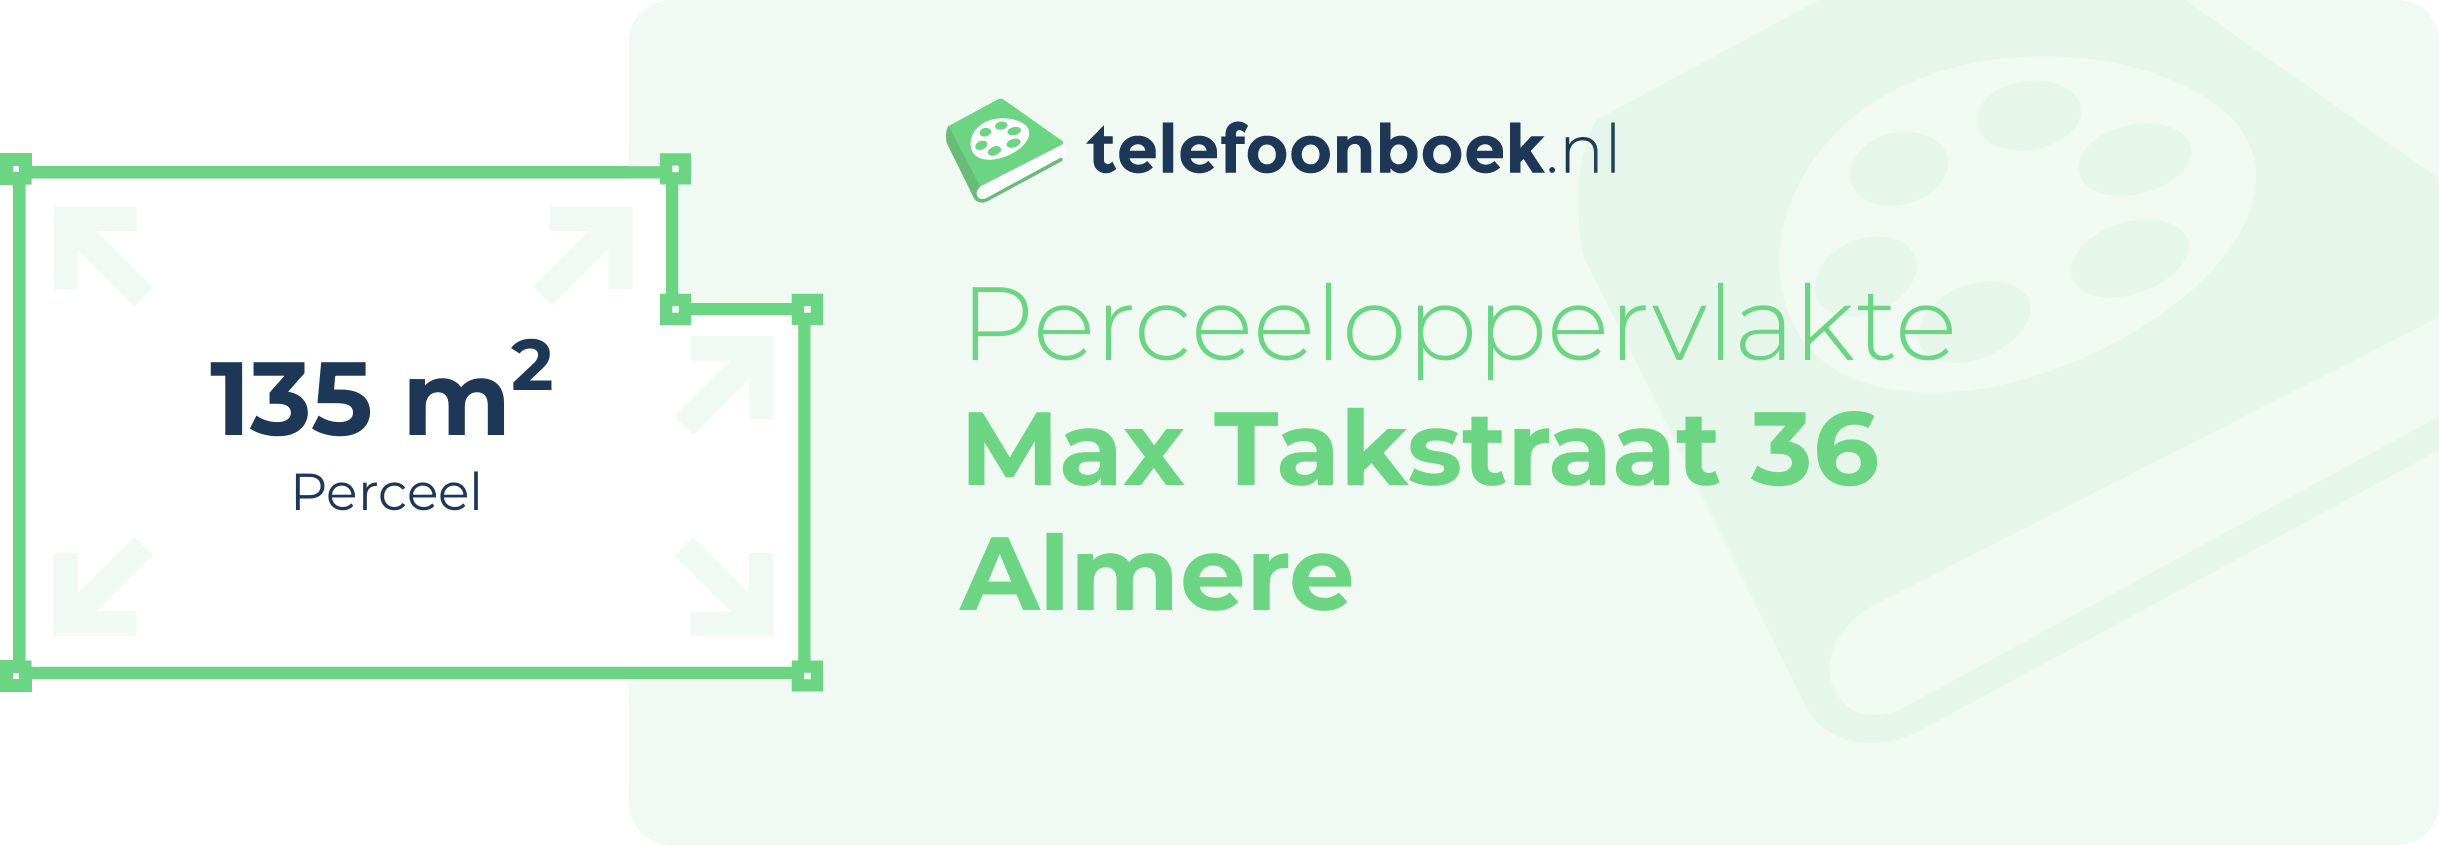 Perceeloppervlakte Max Takstraat 36 Almere